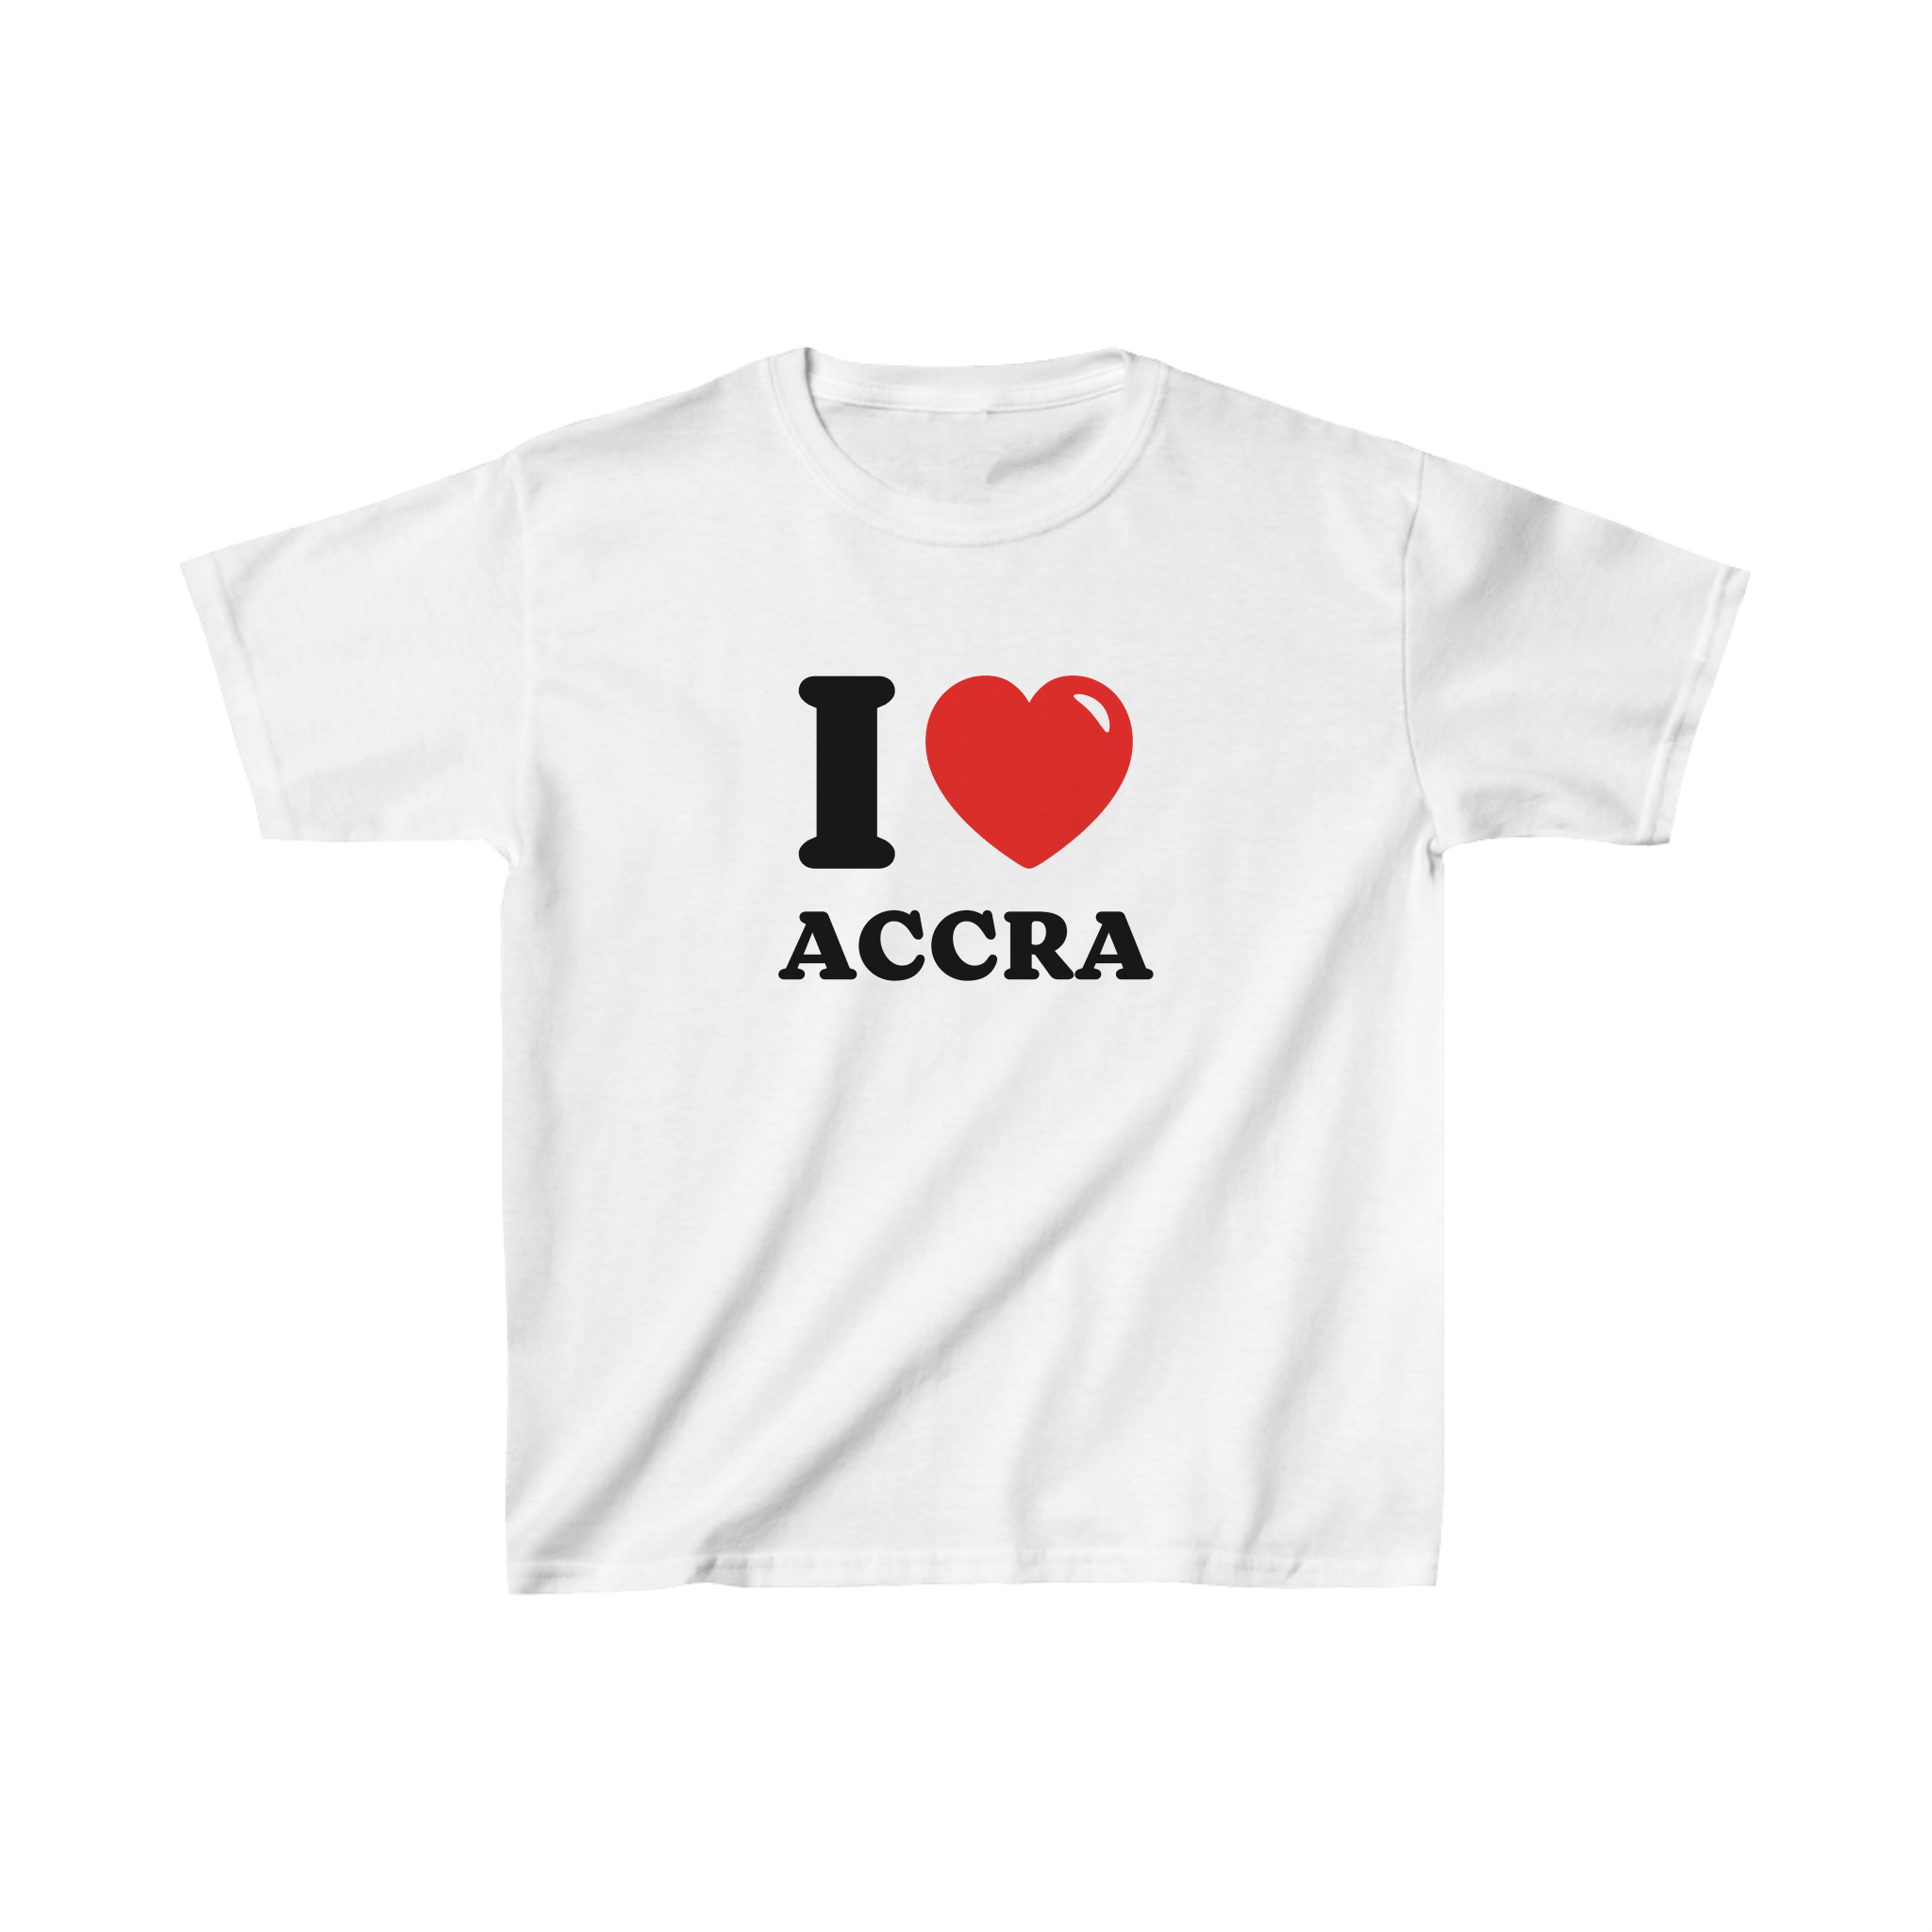 'I love Accra' baby tee - In Print We Trust